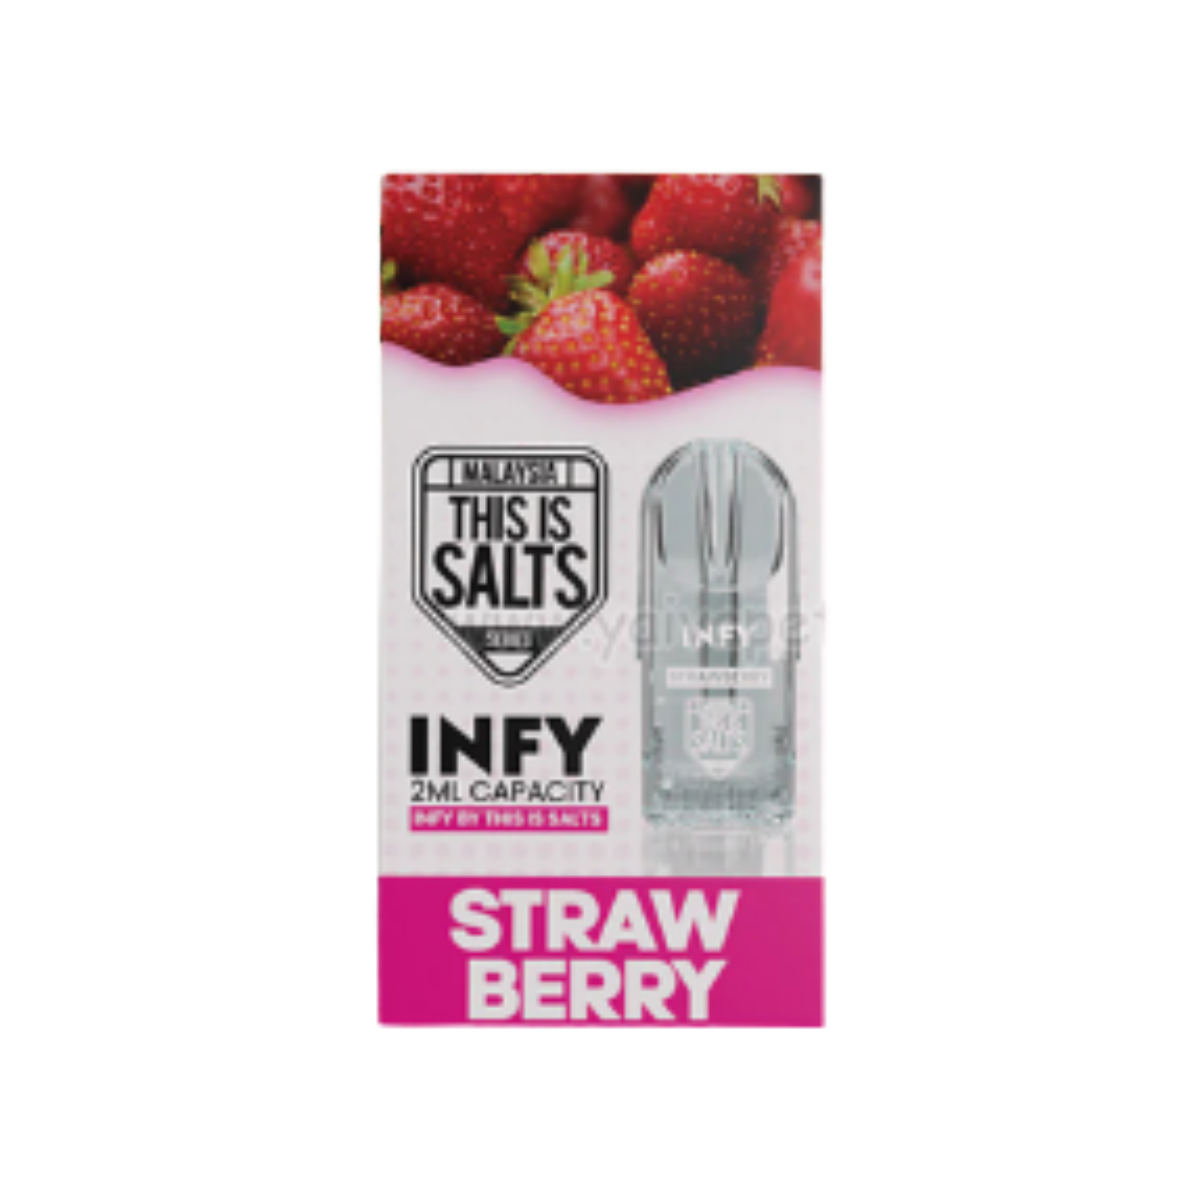 This Is Salts Infy Nicotine Vape Pod - Strawberry, 2ml